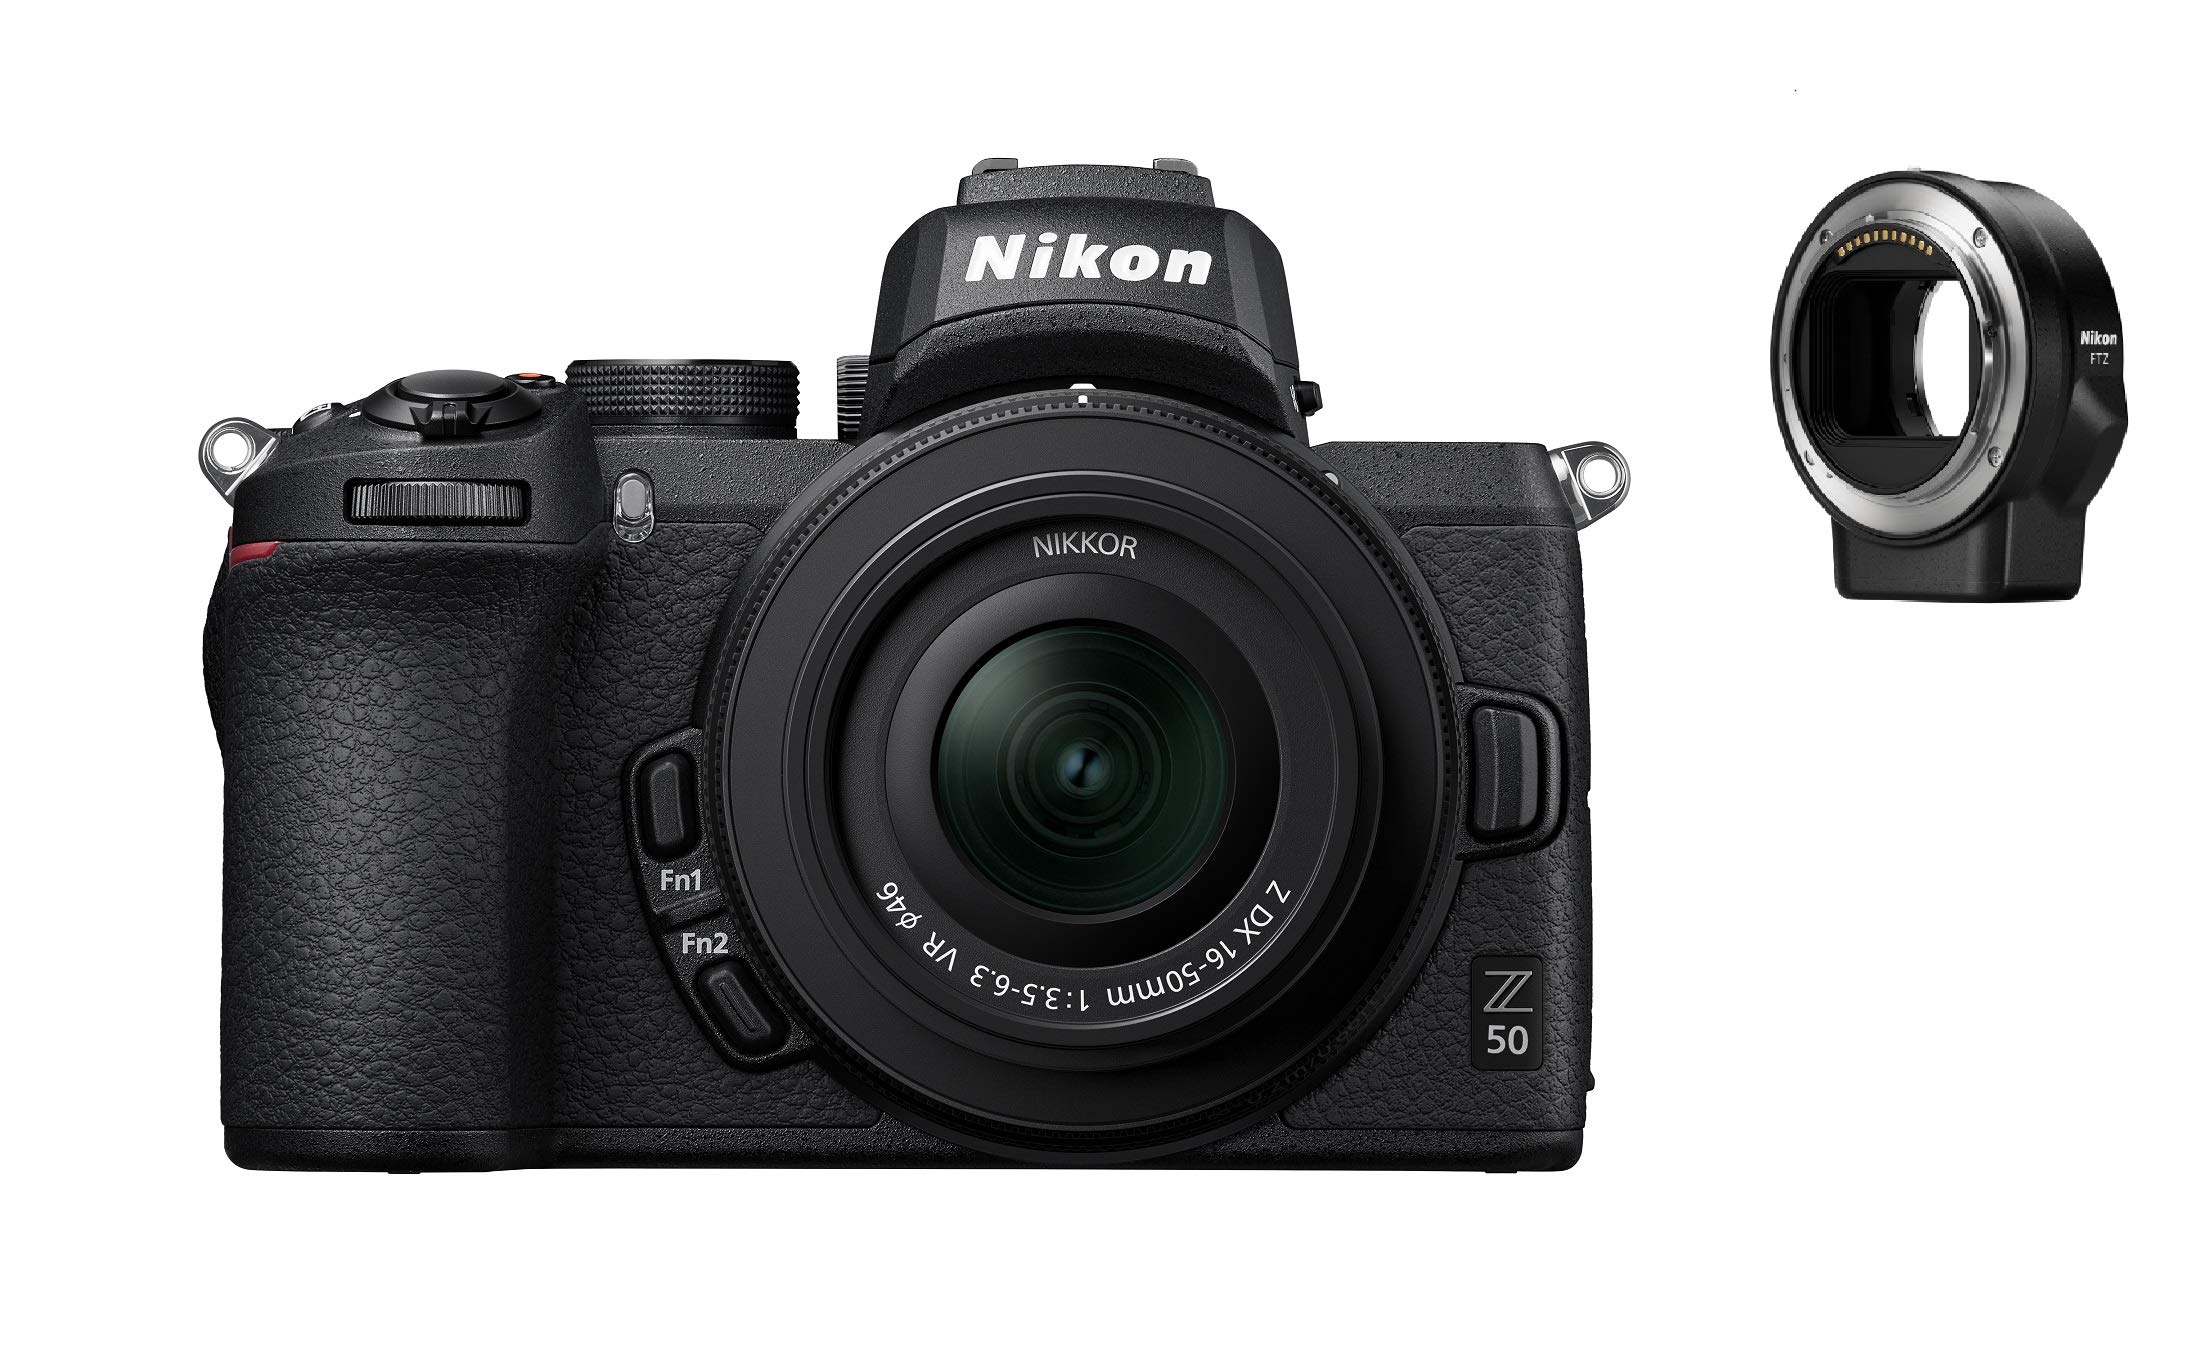 Nikon Z50 + Z DX 16-50mm + FTZ Mirrorless Camera Kit (209-point Hybrid AF, High Speed Image Processing, 4K UHD Movies, High Resolution LCD Monitor) VOA050K004 Black